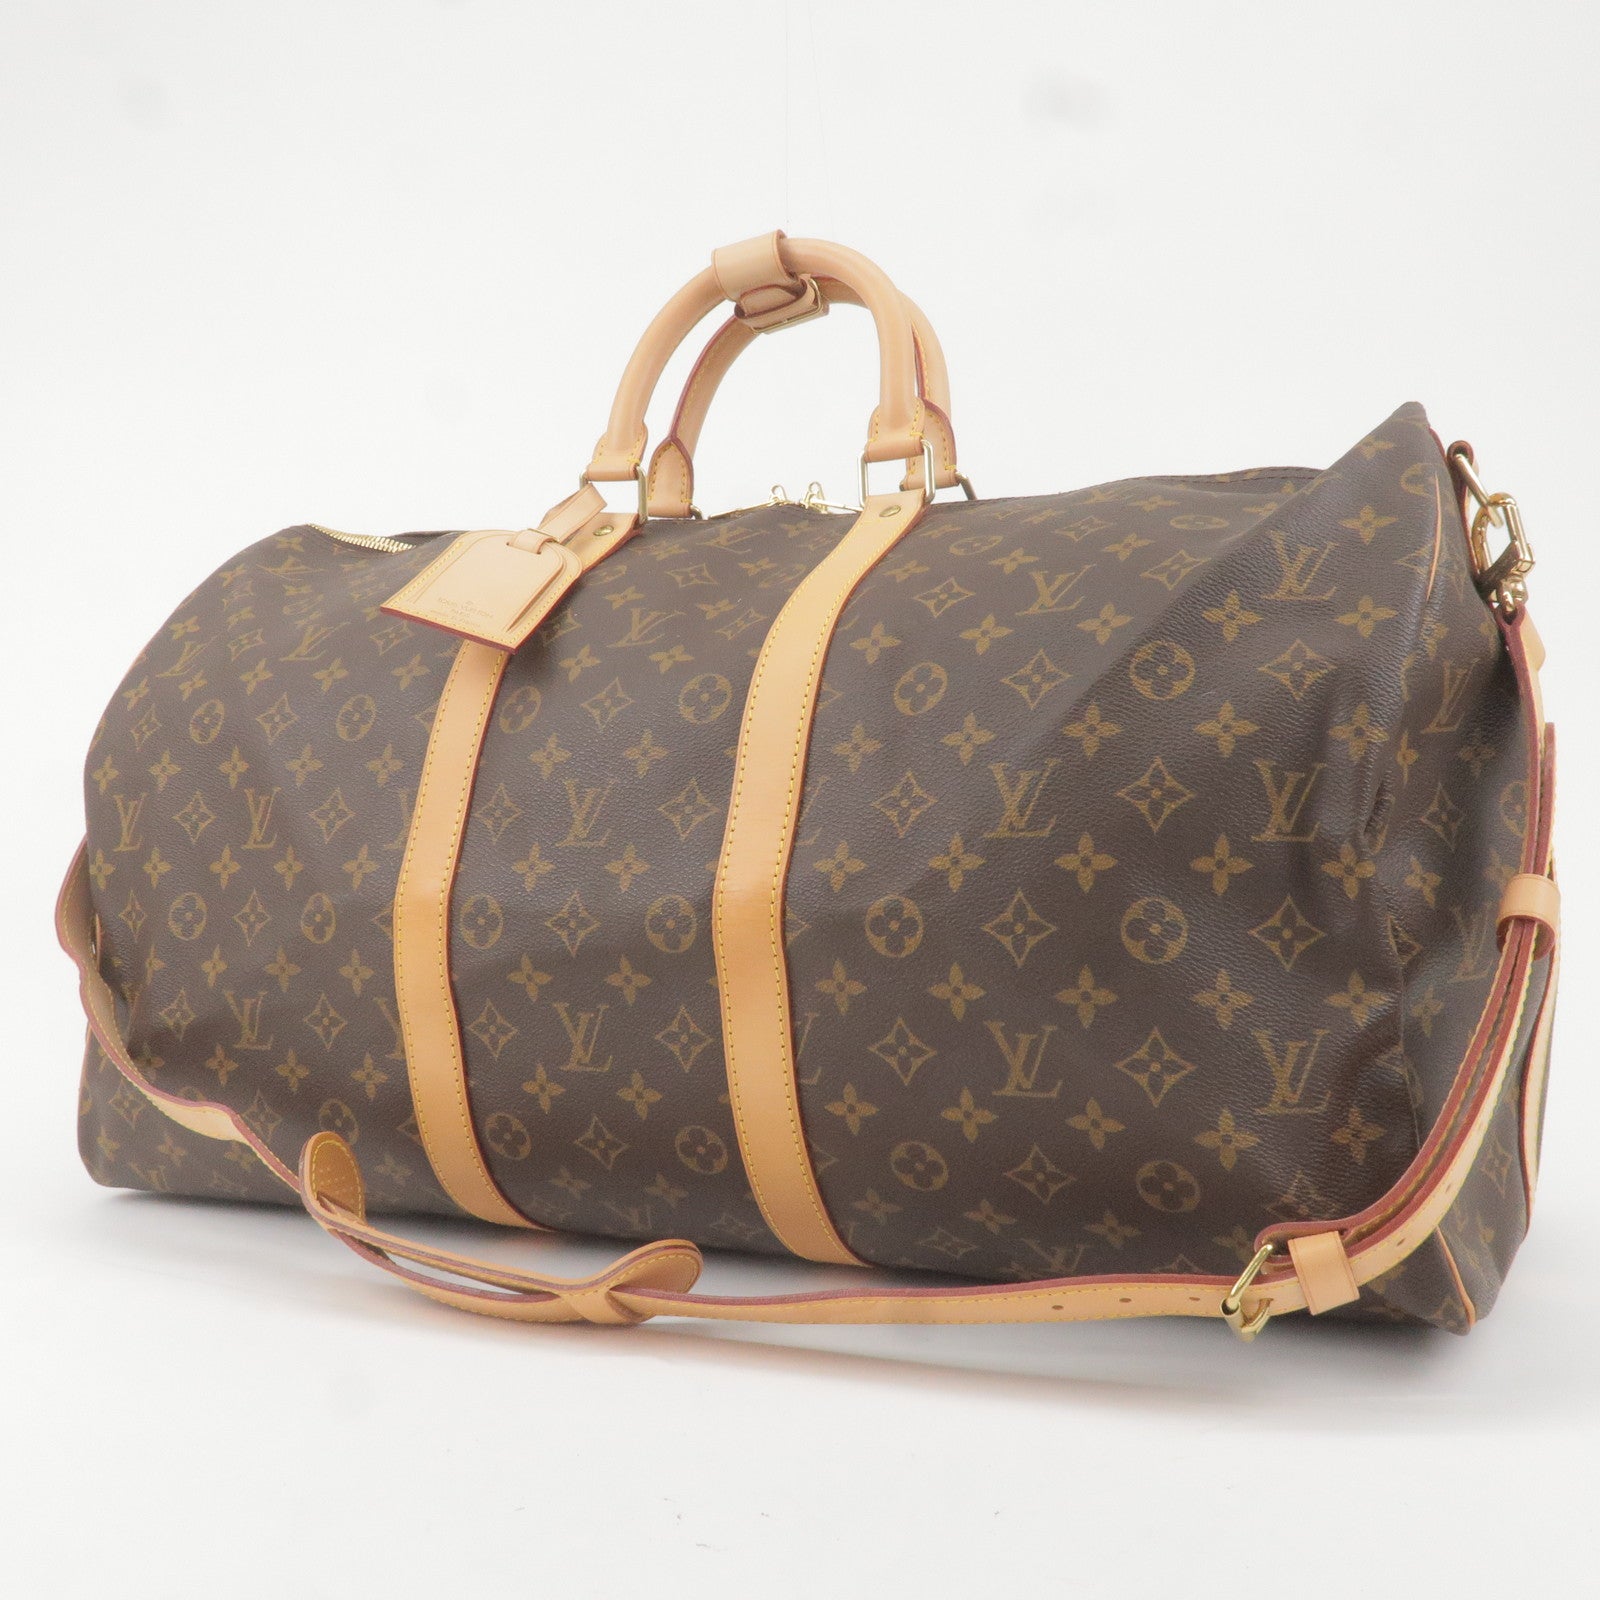 All - Vuitton - Monogram - Bandouliere - Keep - Bag - Louis